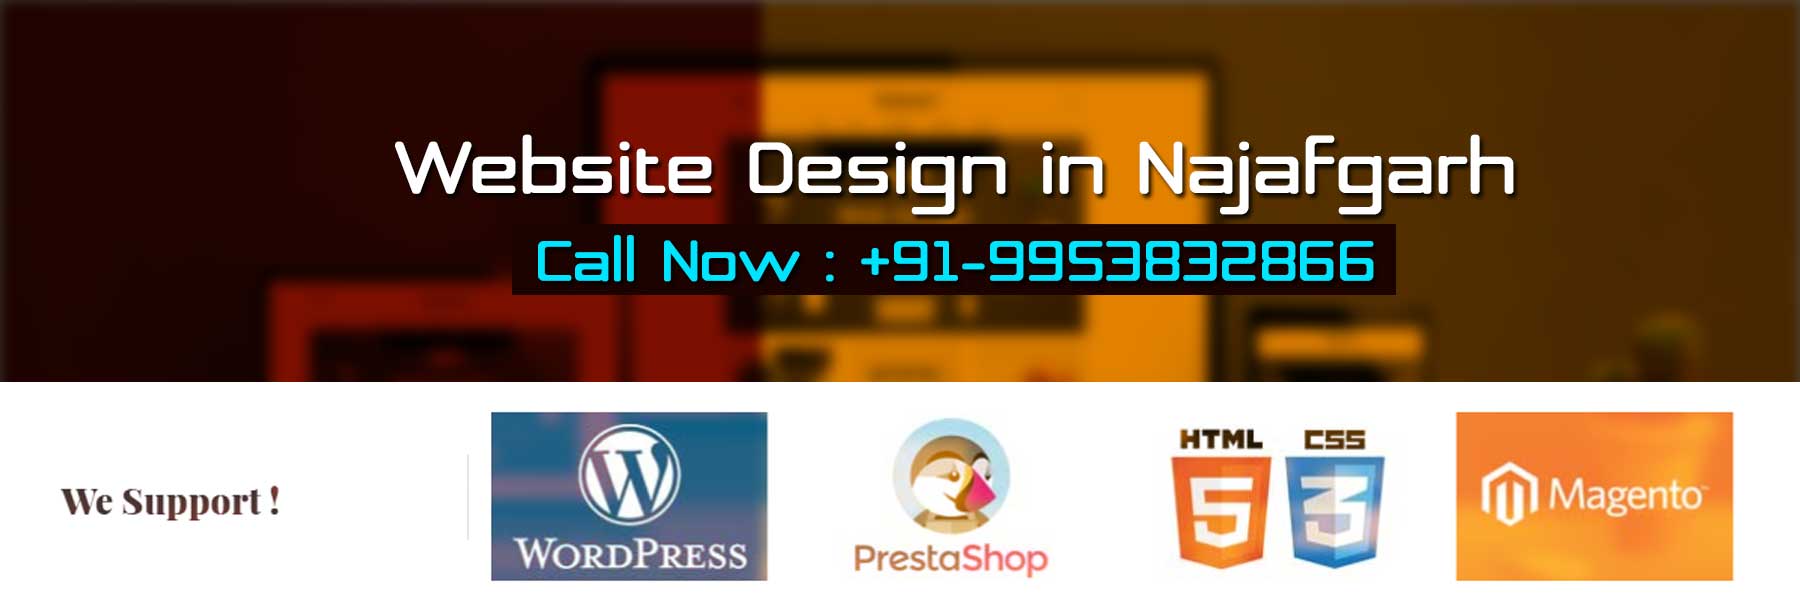 Website Design in Najafgarh